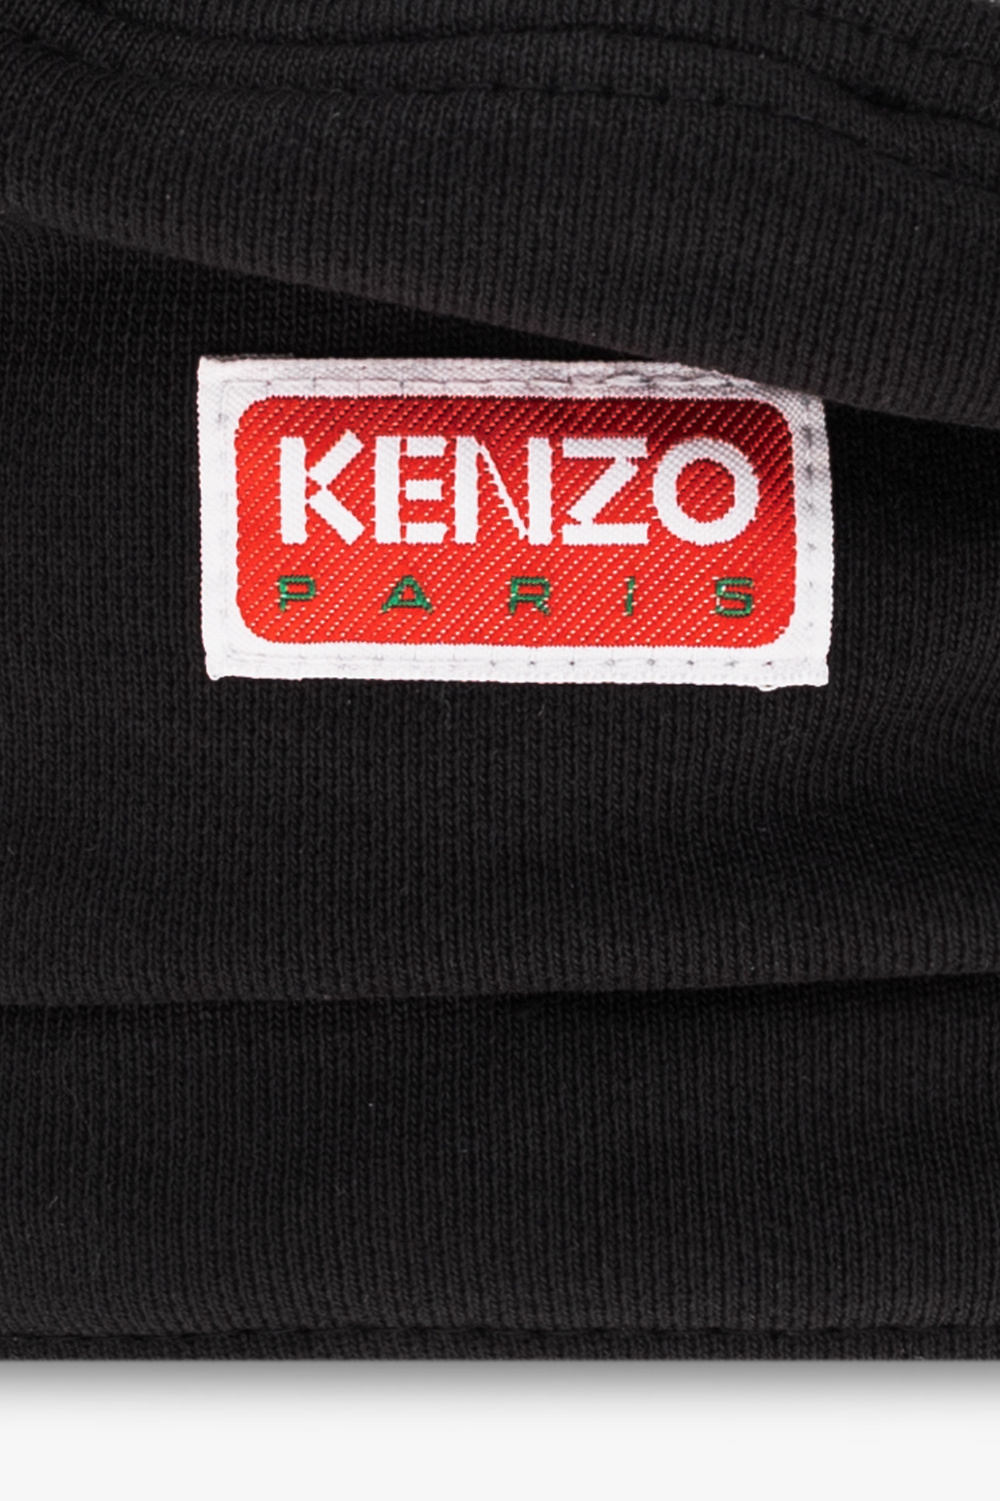 Kenzo embroidered motorsport baseball cap